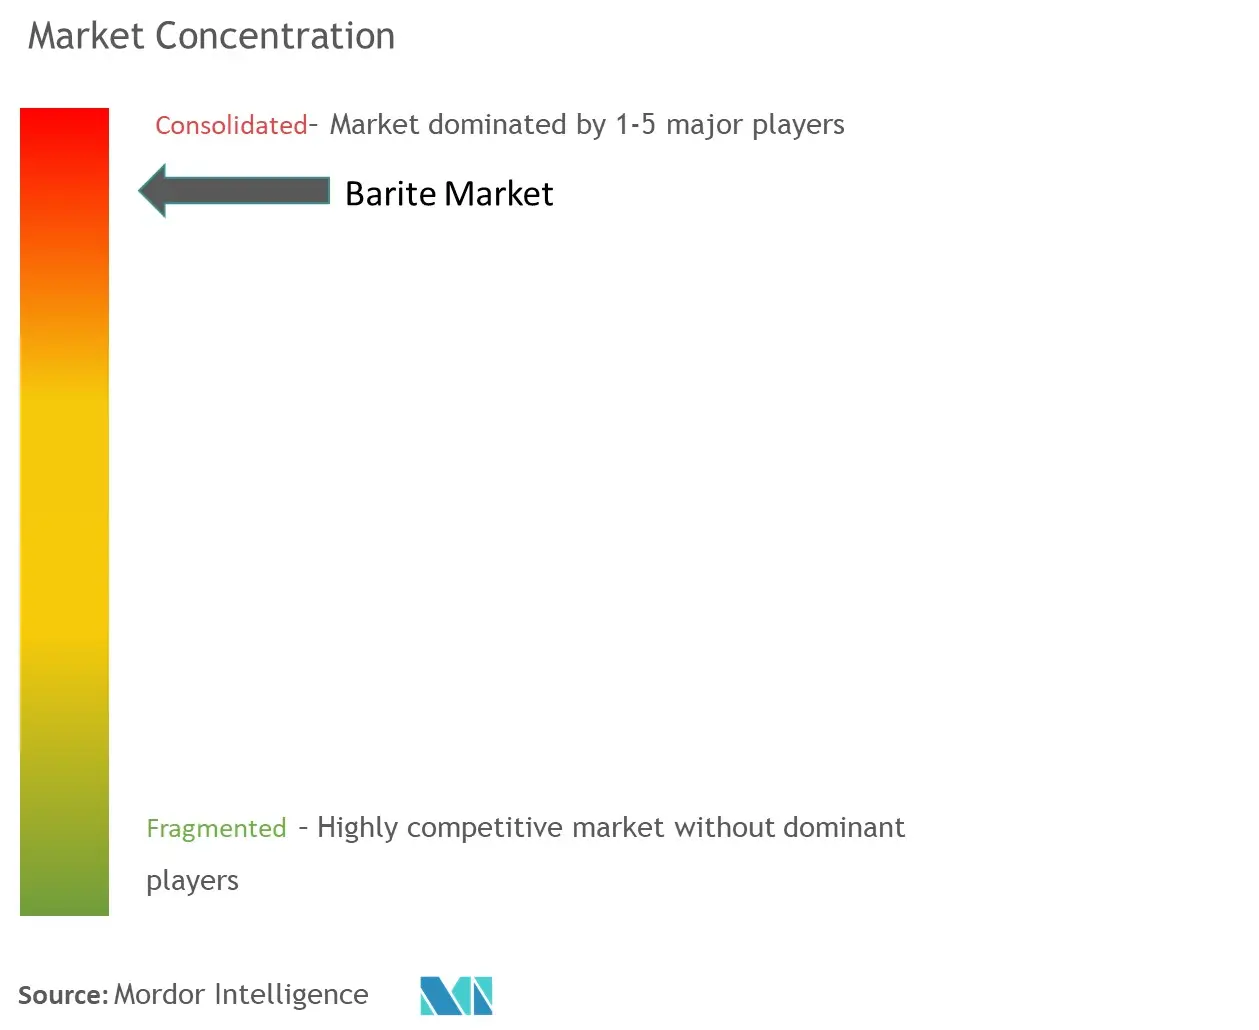 Barite Market Concentration